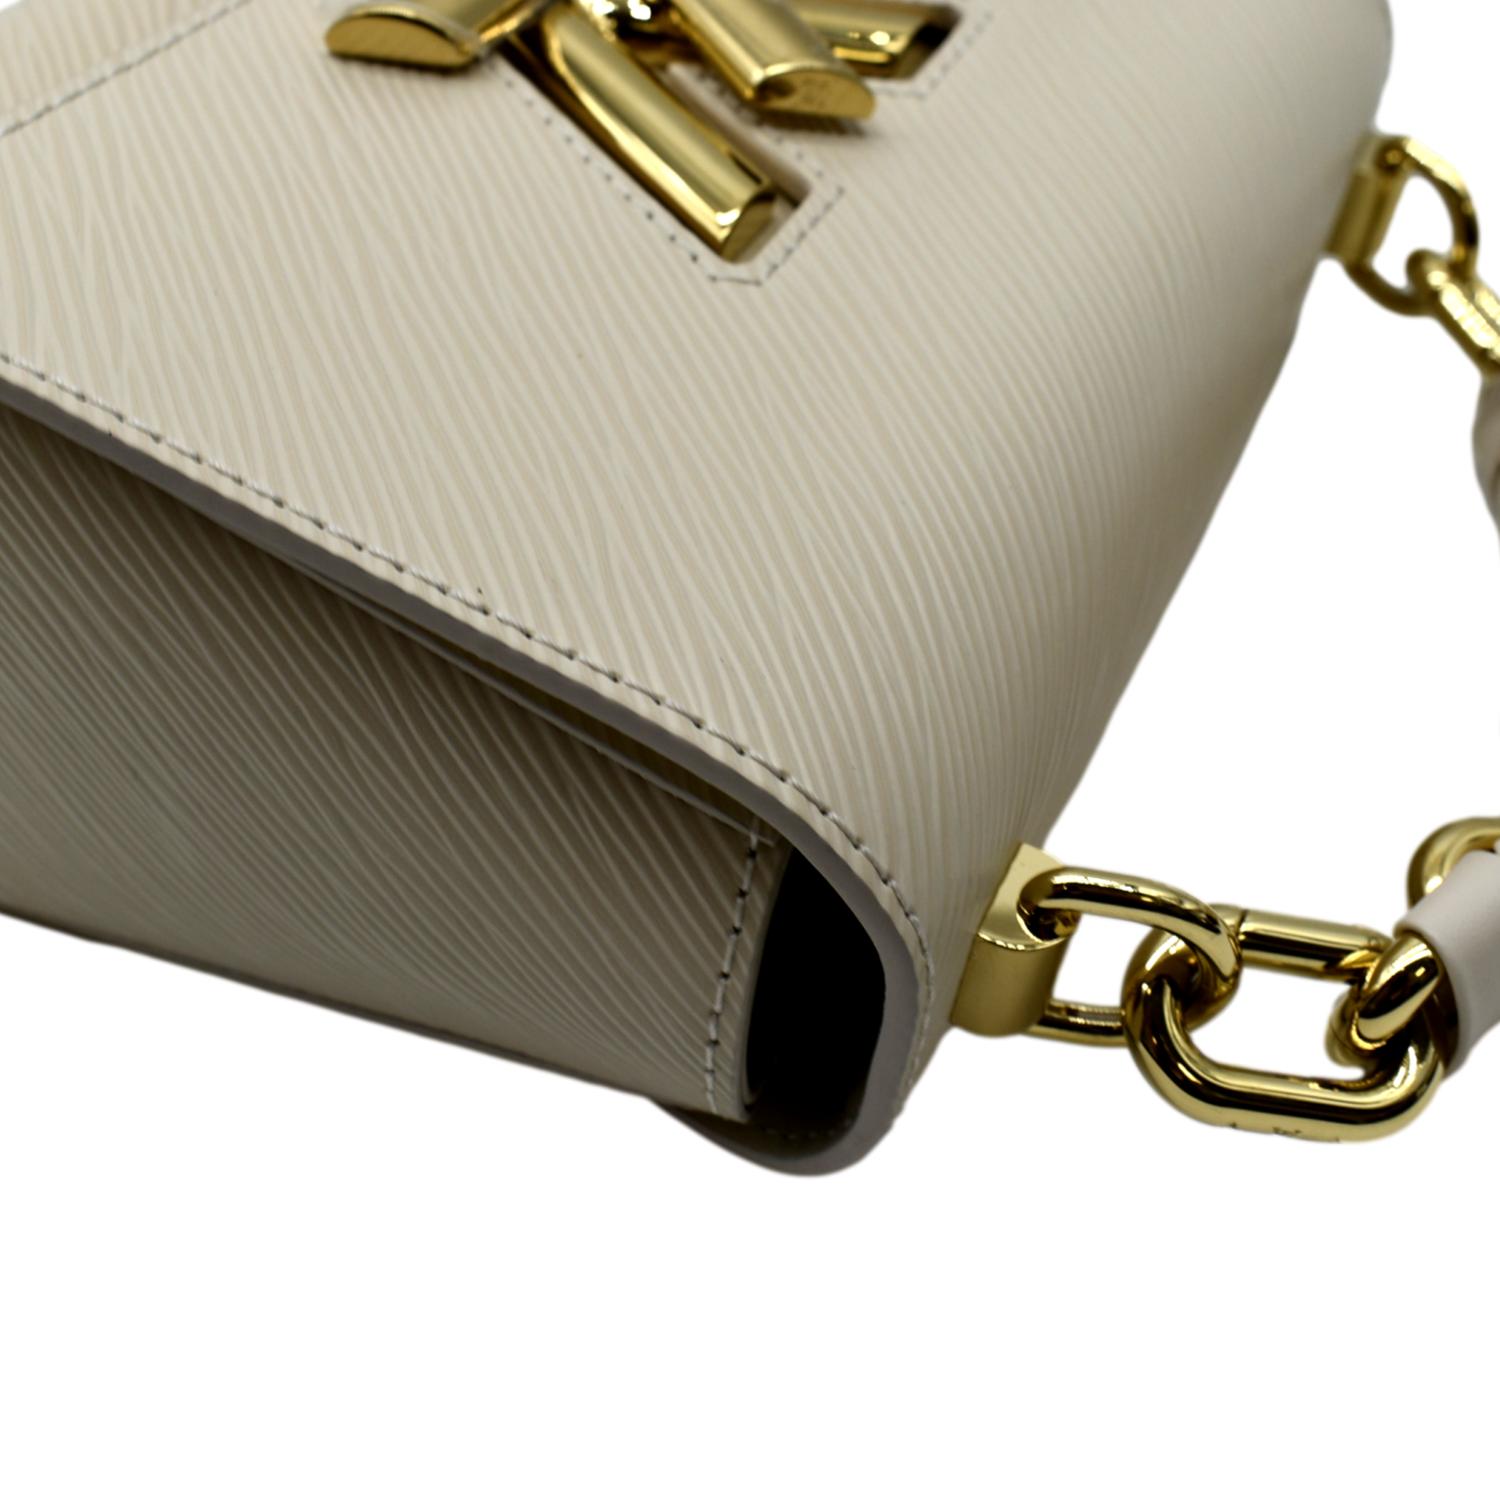 Louis Vuitton Epi Twist Bag Review 